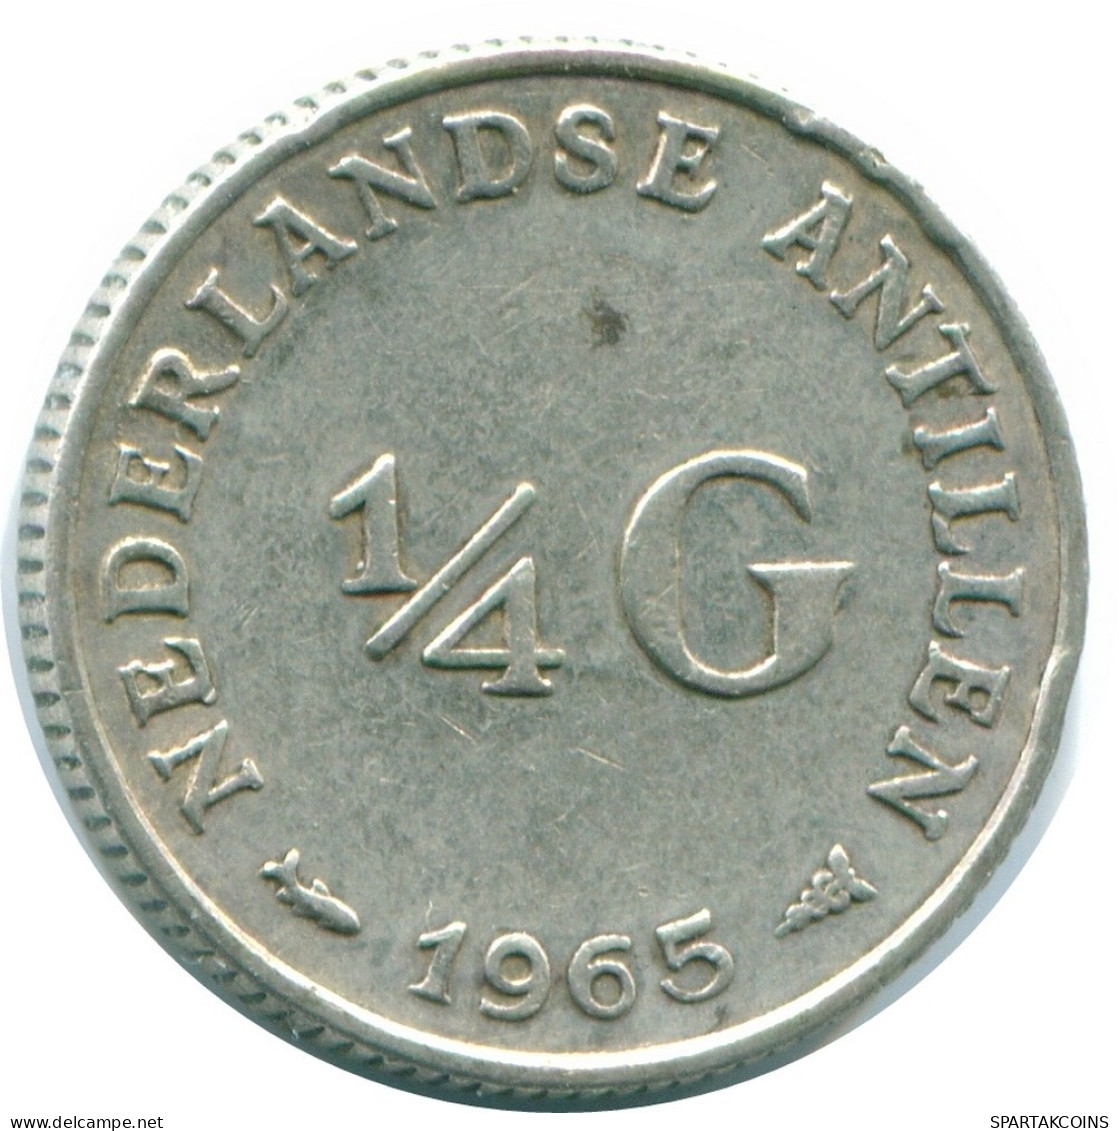 1/4 GULDEN 1965 NIEDERLÄNDISCHE ANTILLEN SILBER Koloniale Münze #NL11293.4.D.A - Netherlands Antilles